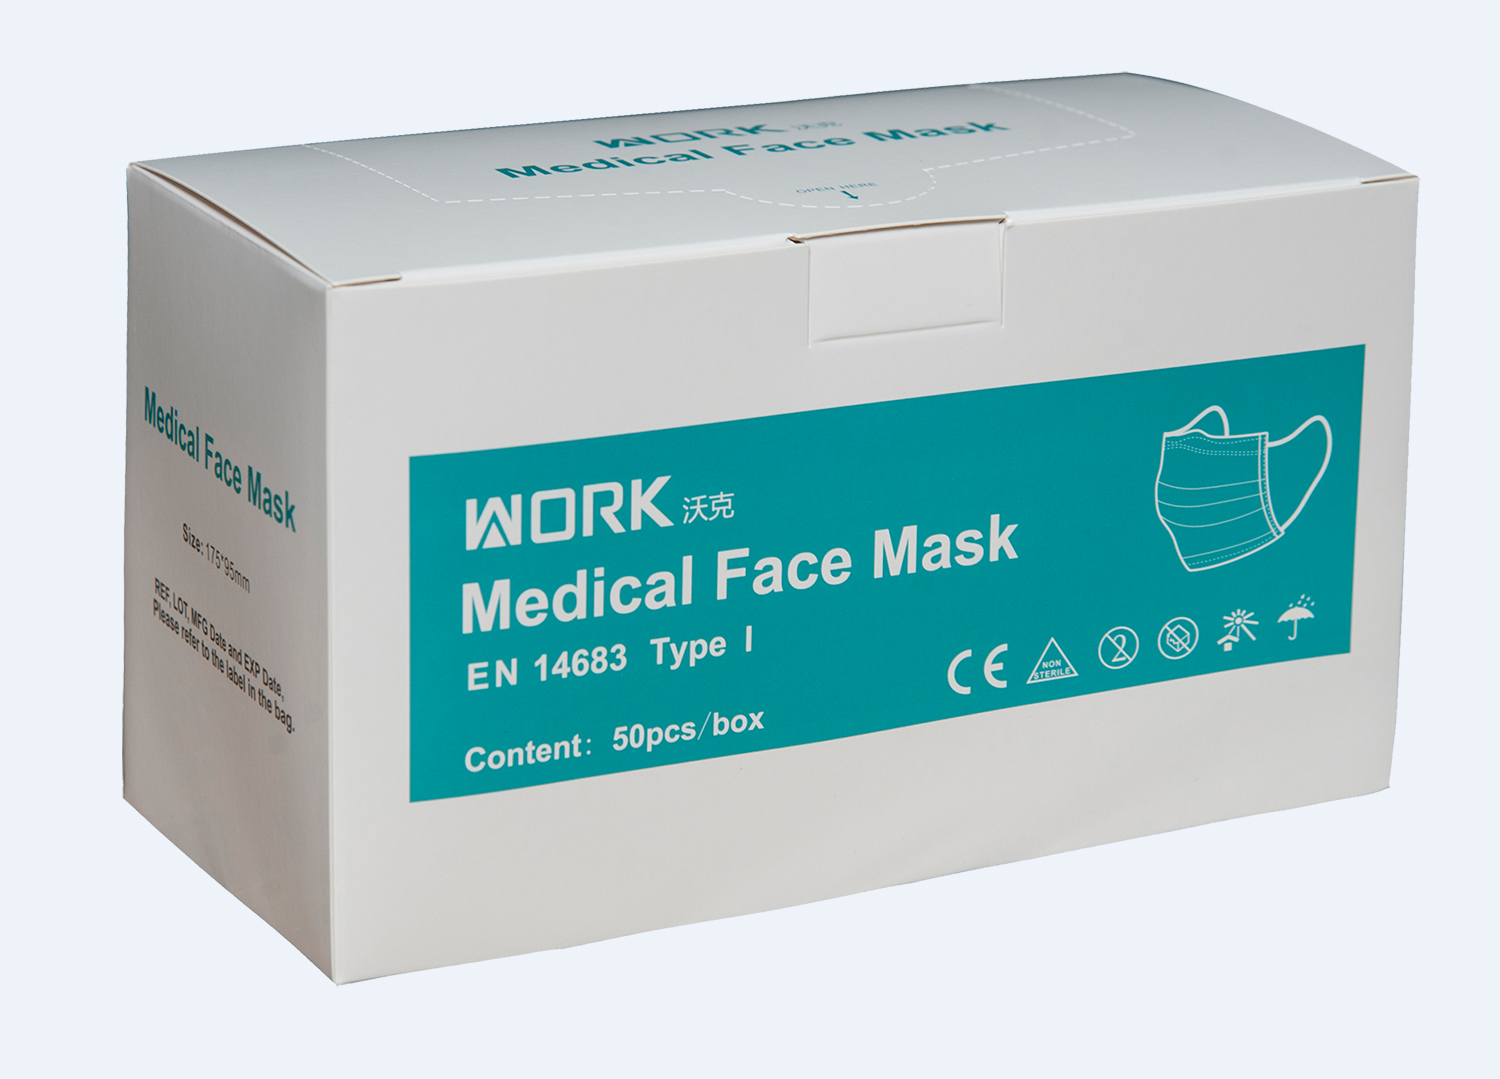 Medical Face Mask အမျိုးအစား (၅)မျိုး၊